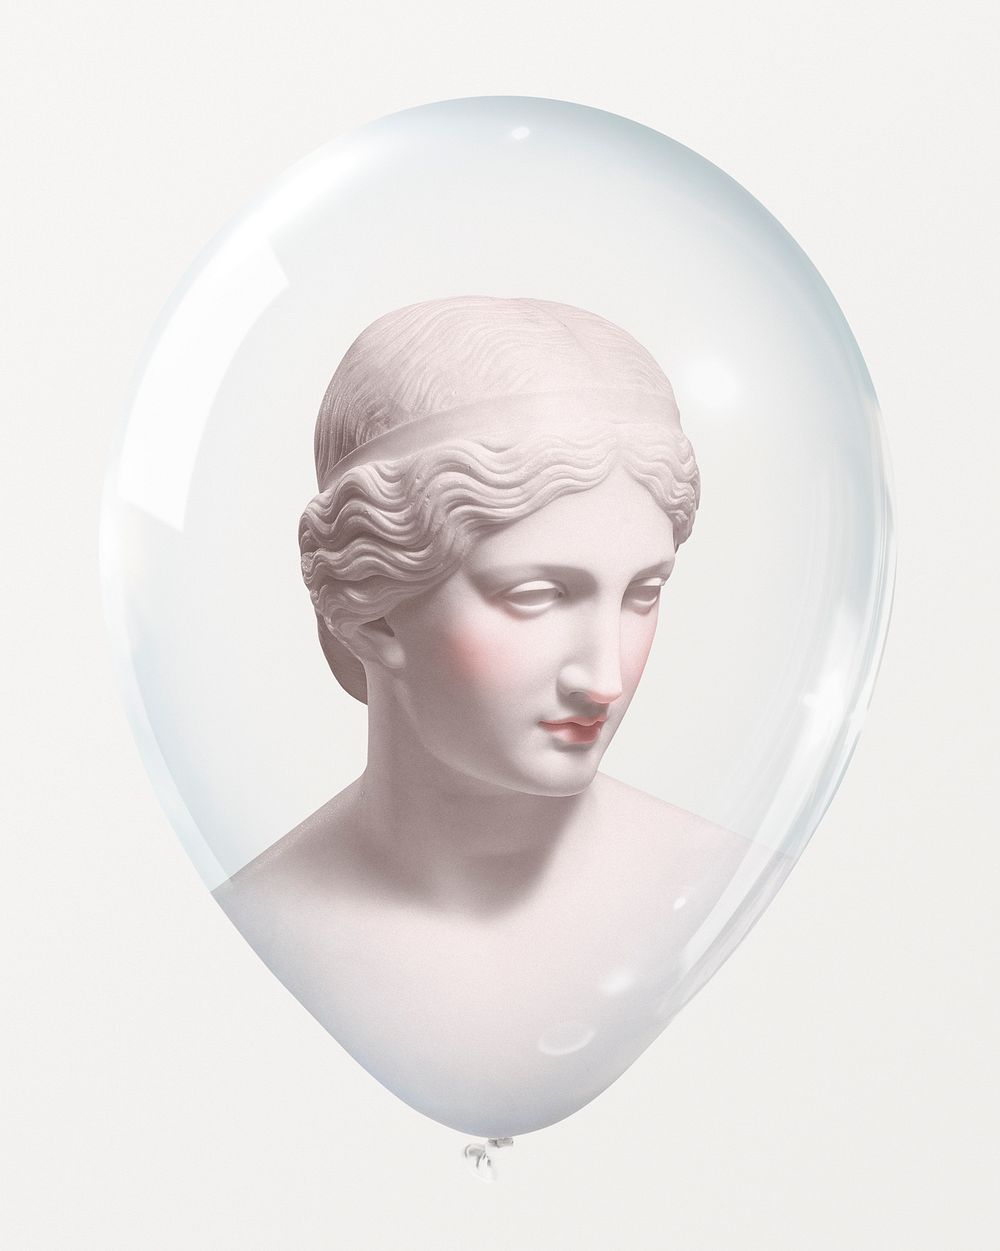 Greek goddess statue printed on clear balloon, remixed media